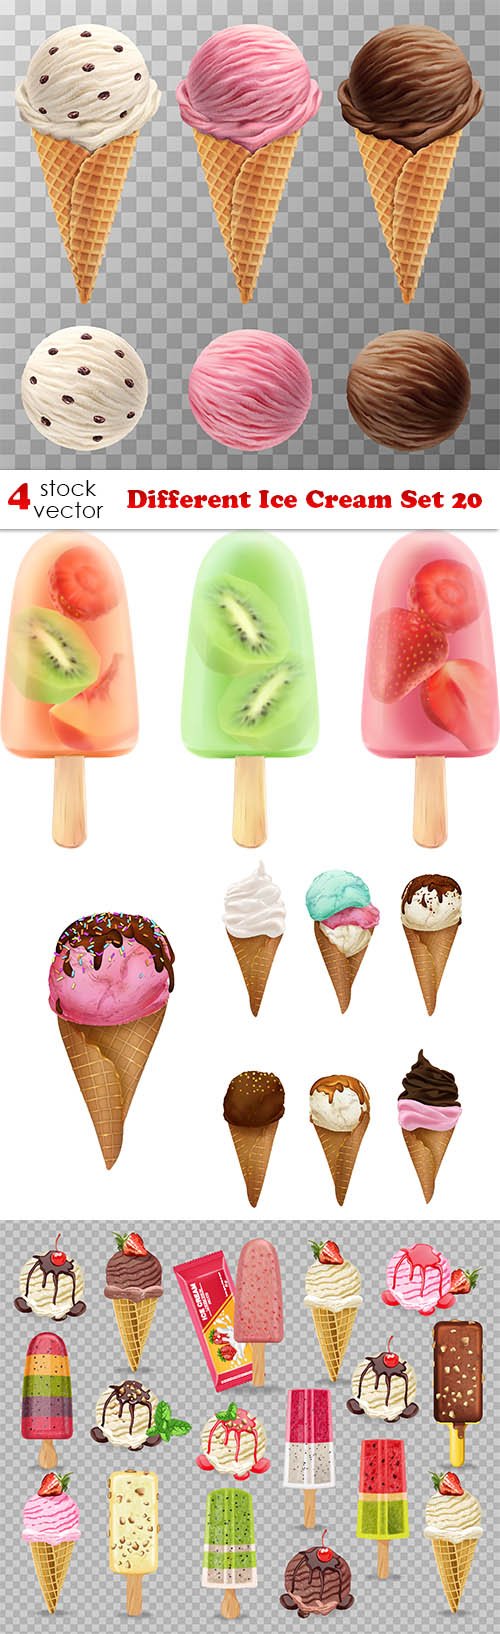 Vectors - Different Ice Cream Set 20